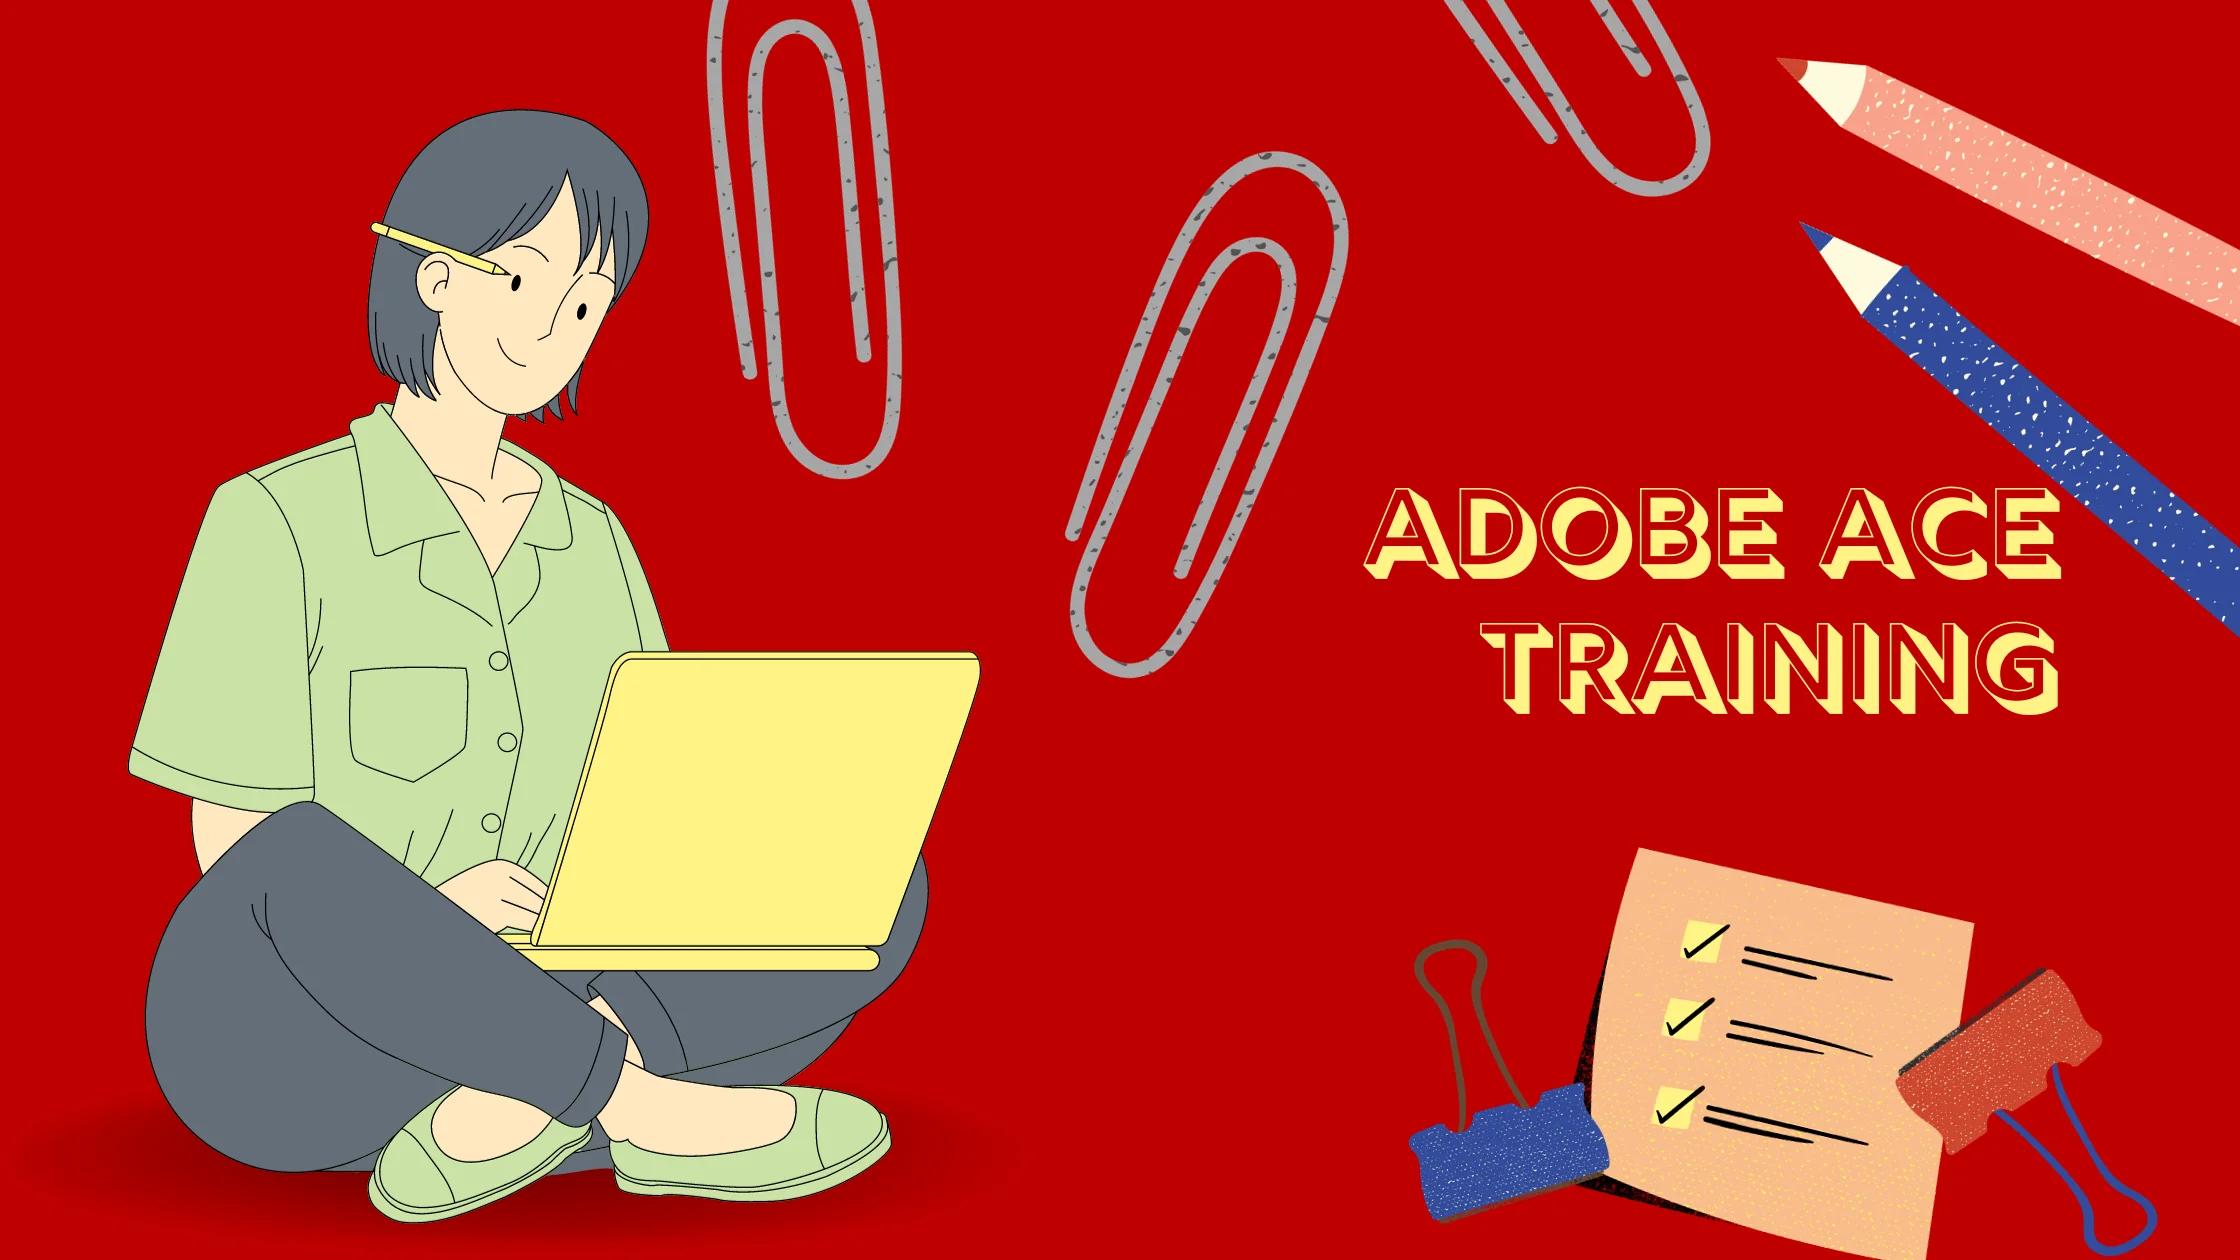 Adobe ACE Training success